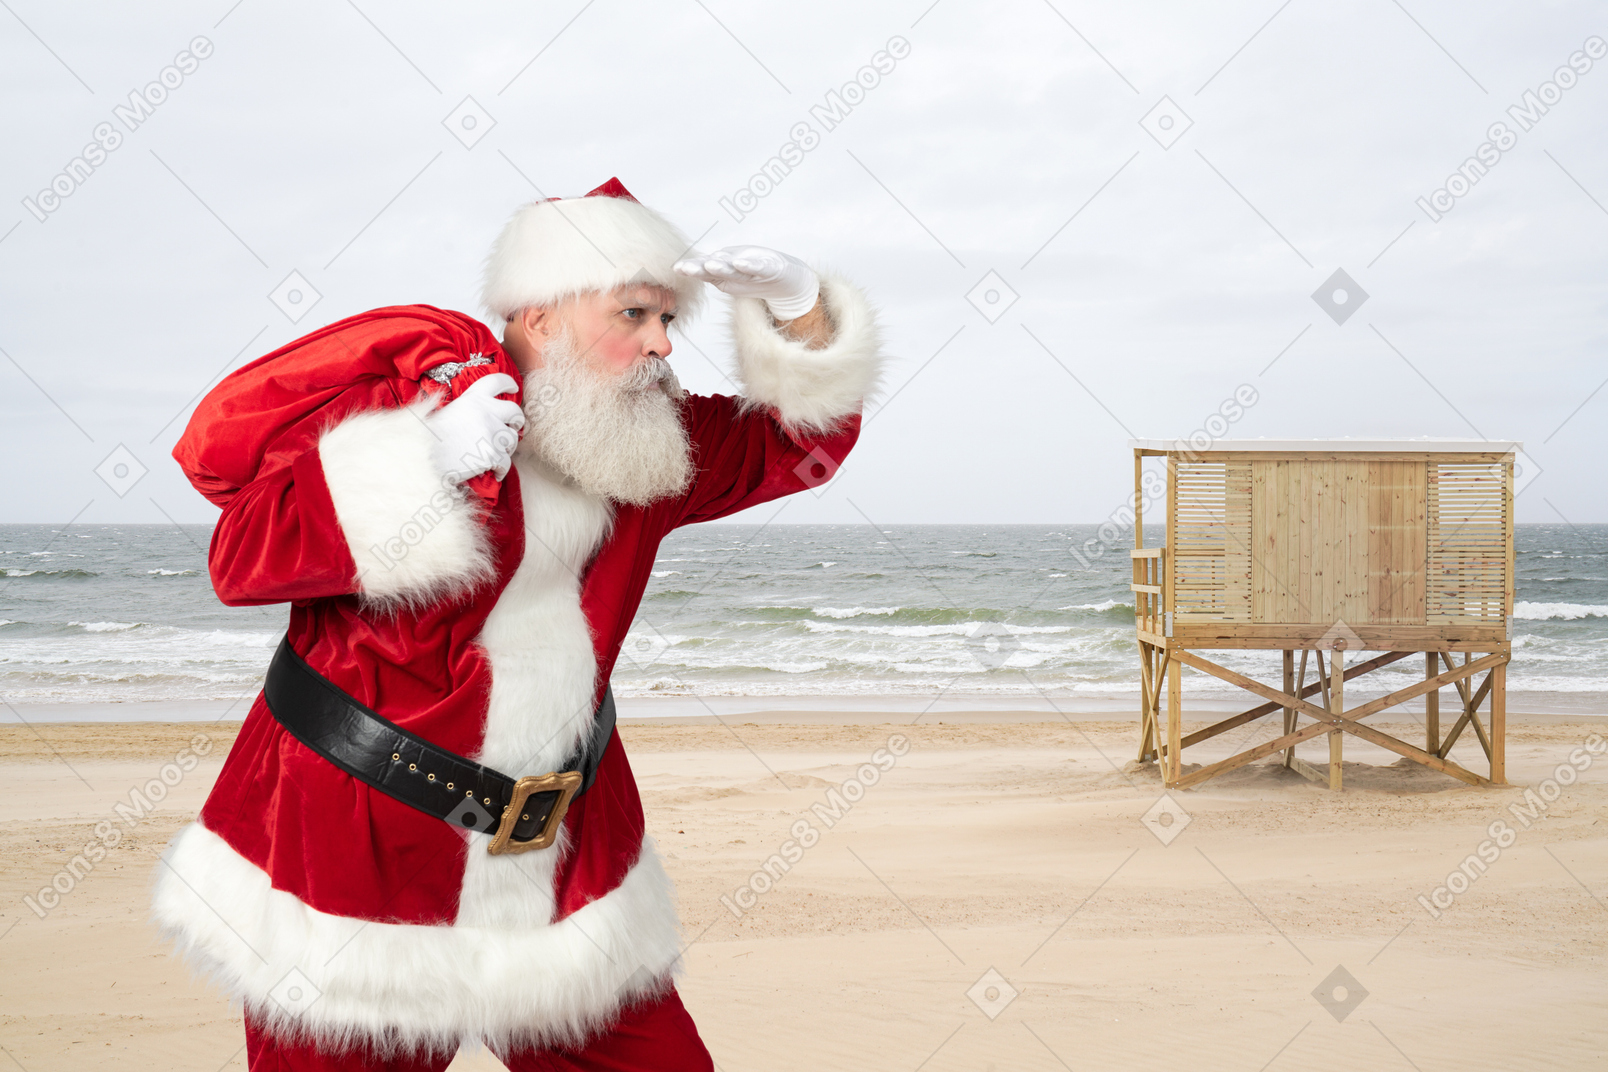 Santa walking on the beach